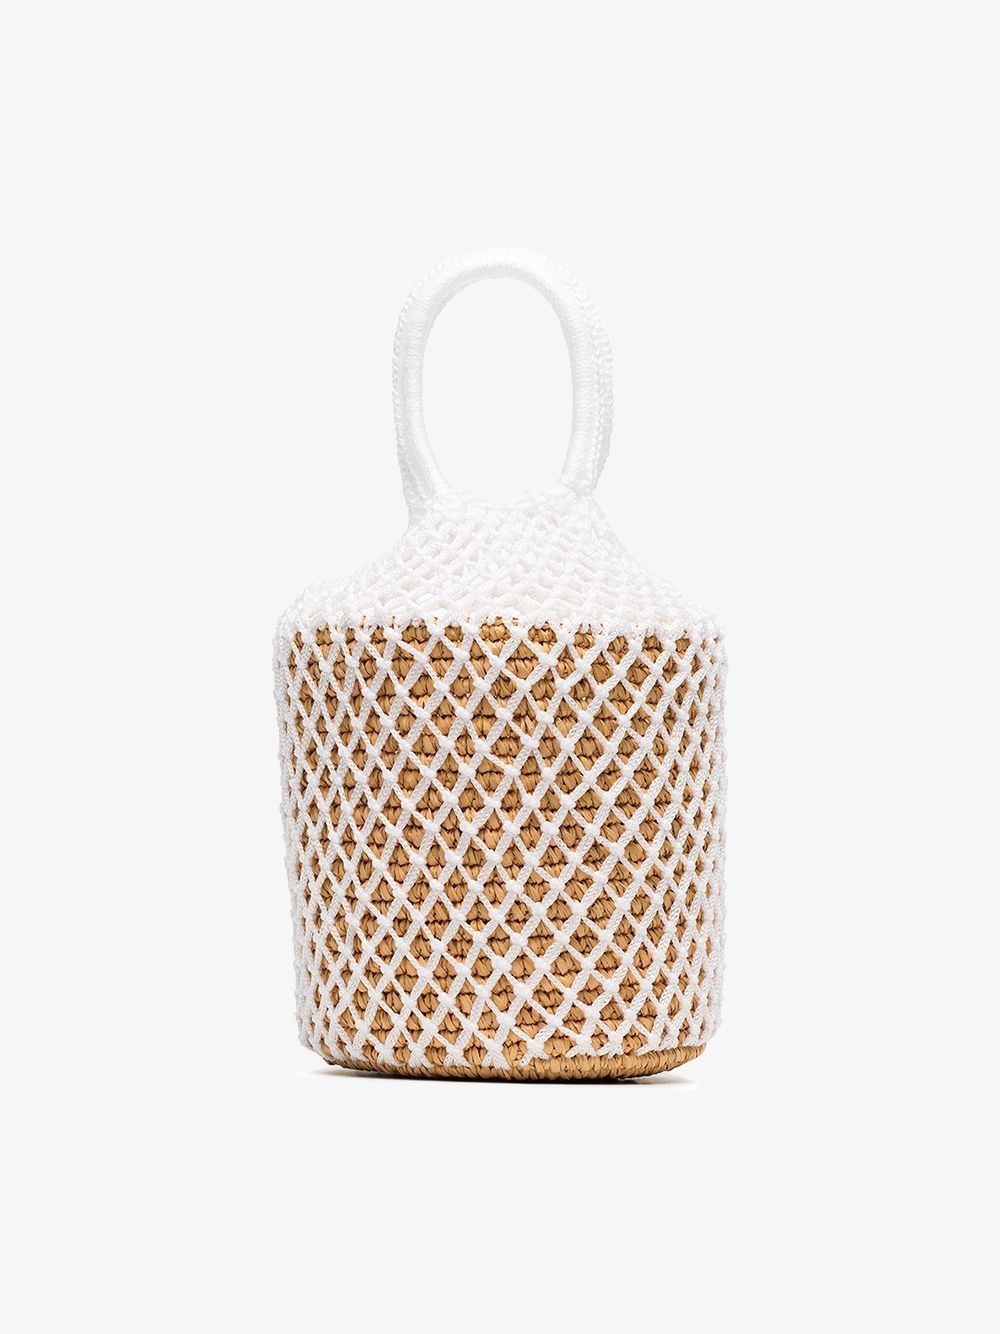 Sensi Studio White straw and net bucket bag | Browns Fashion